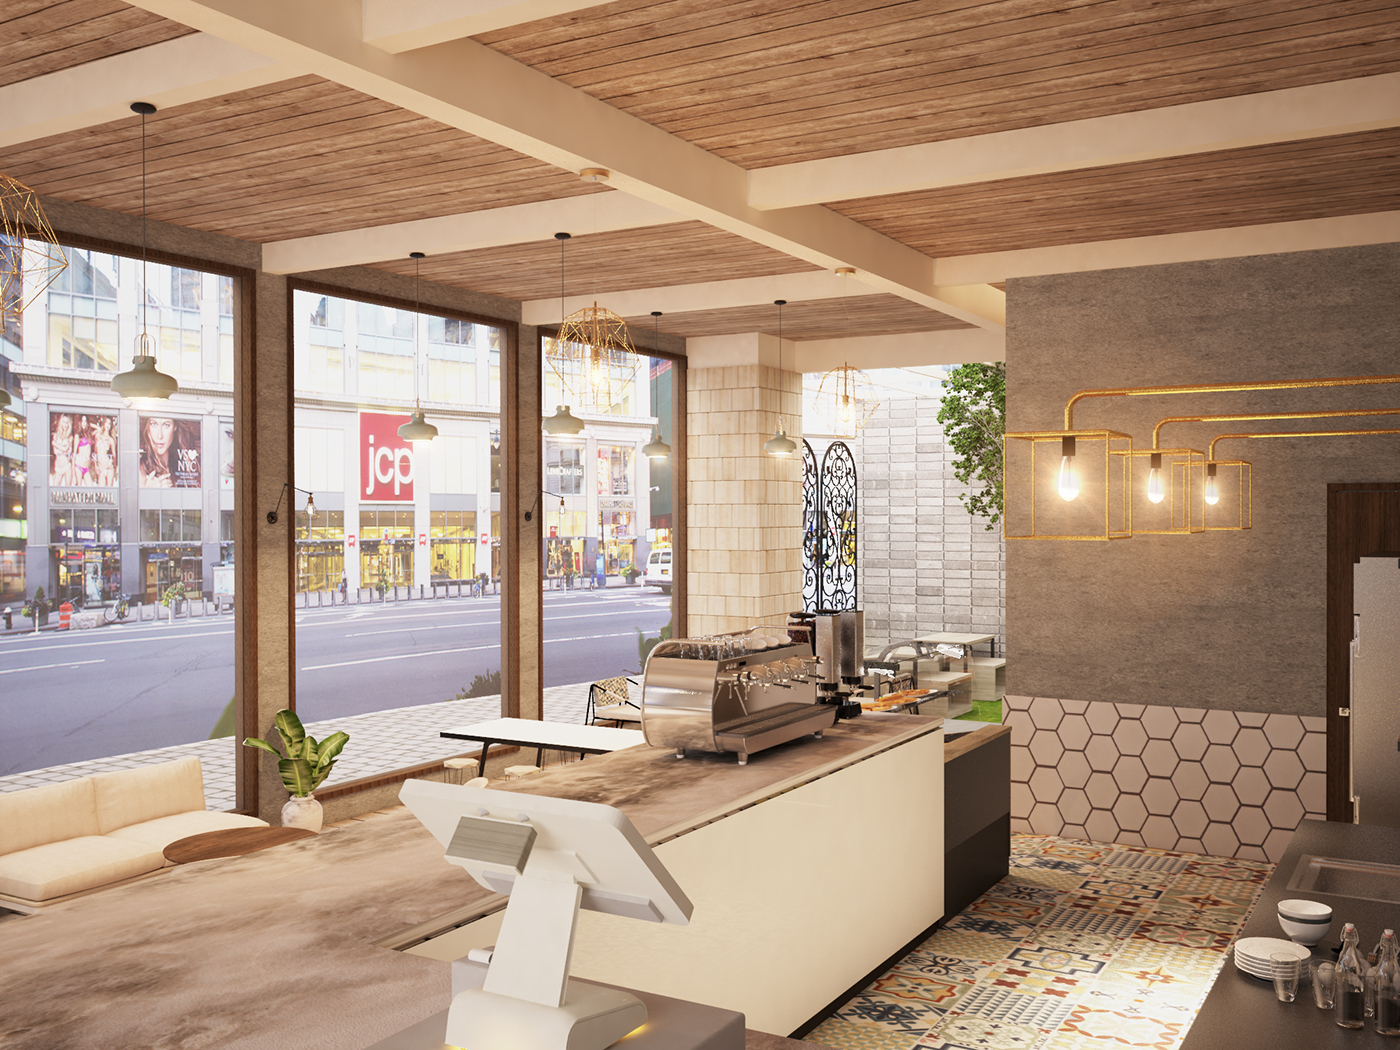 interiordesign cafe Render coffeeshop 3dvisualizer 3DArtist designer artwork Retail Hospitality